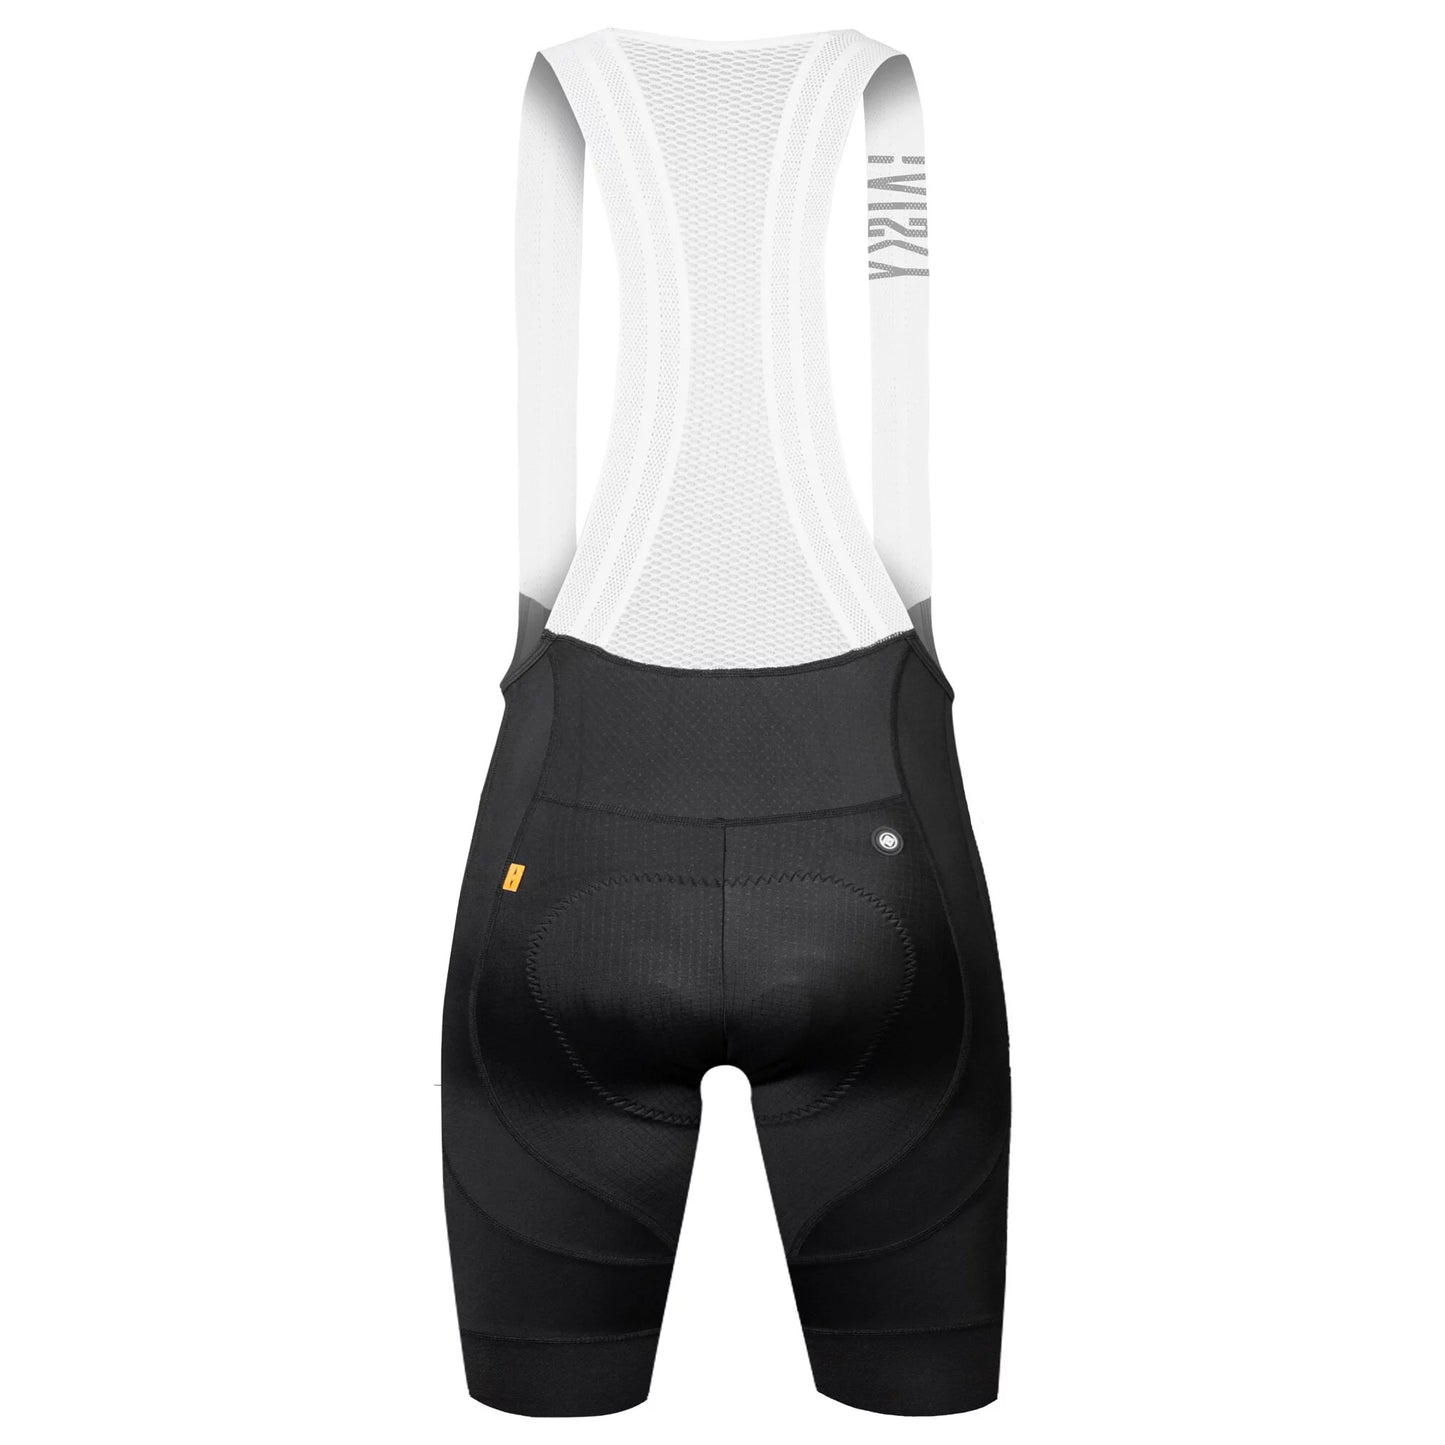 Baisky Ultra Endurance Bib Shorts with Elastic Interface Pads ─ TRMB 2680 Unlimited II Black